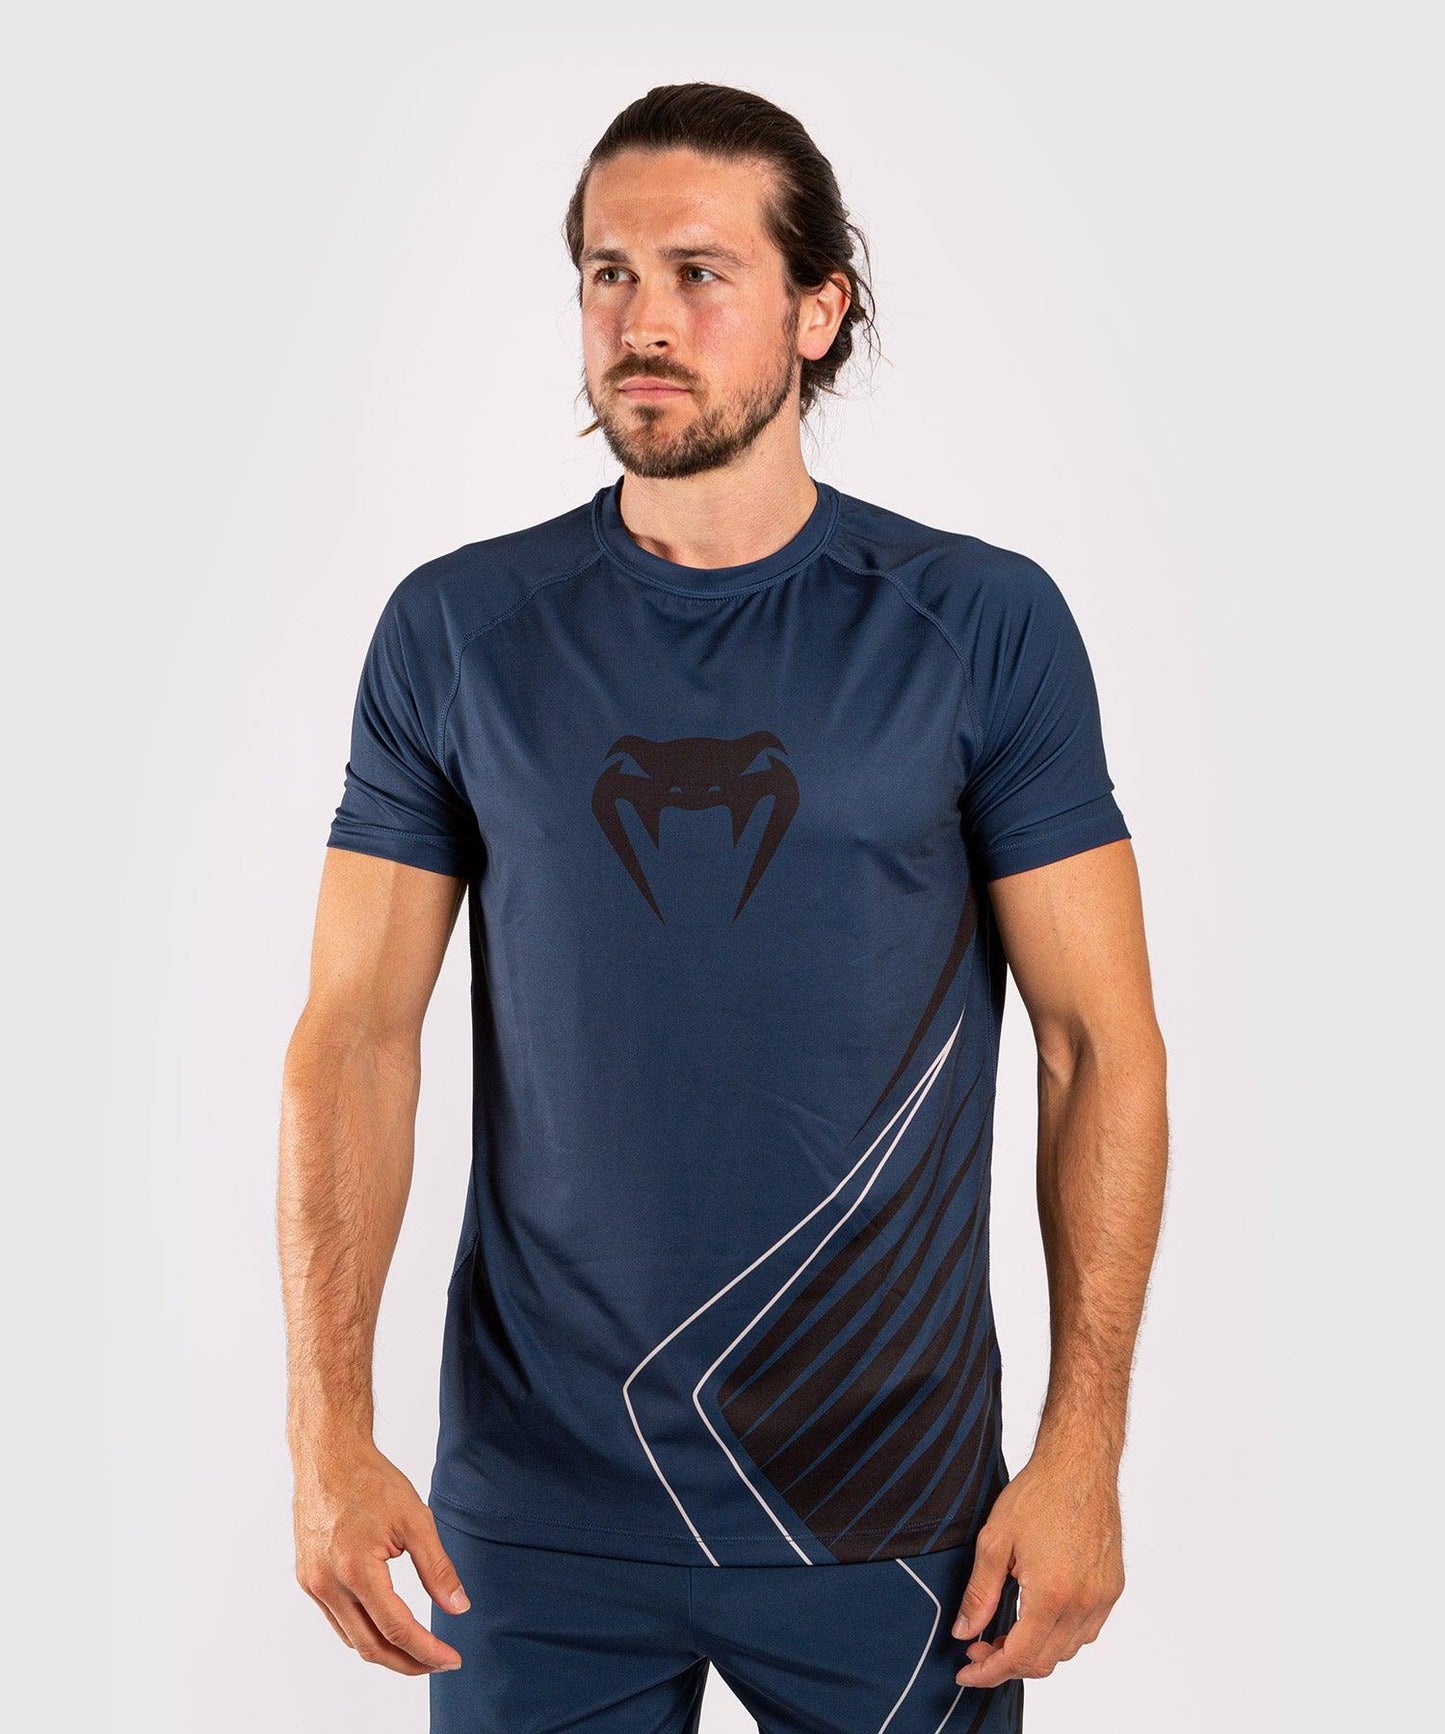 Venum Contender 5.0 Dry-Tech T-shirt - Navy/Sand Picture 1